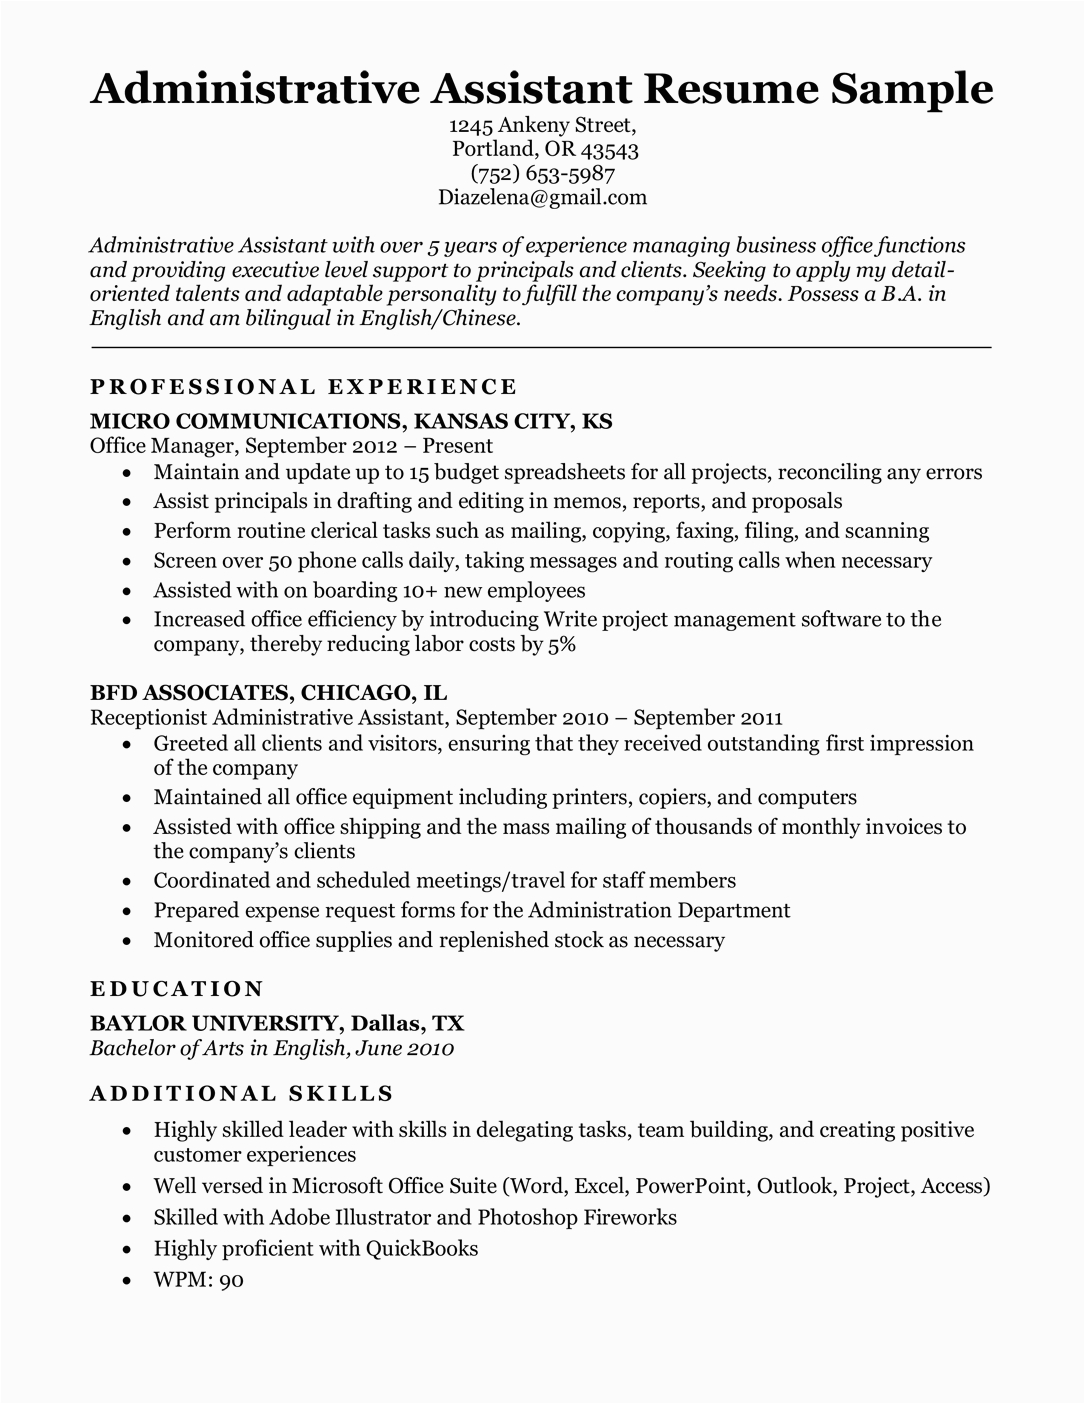 Sample Resume Profile for Administrative assistant Resume Bio Administrative assistant